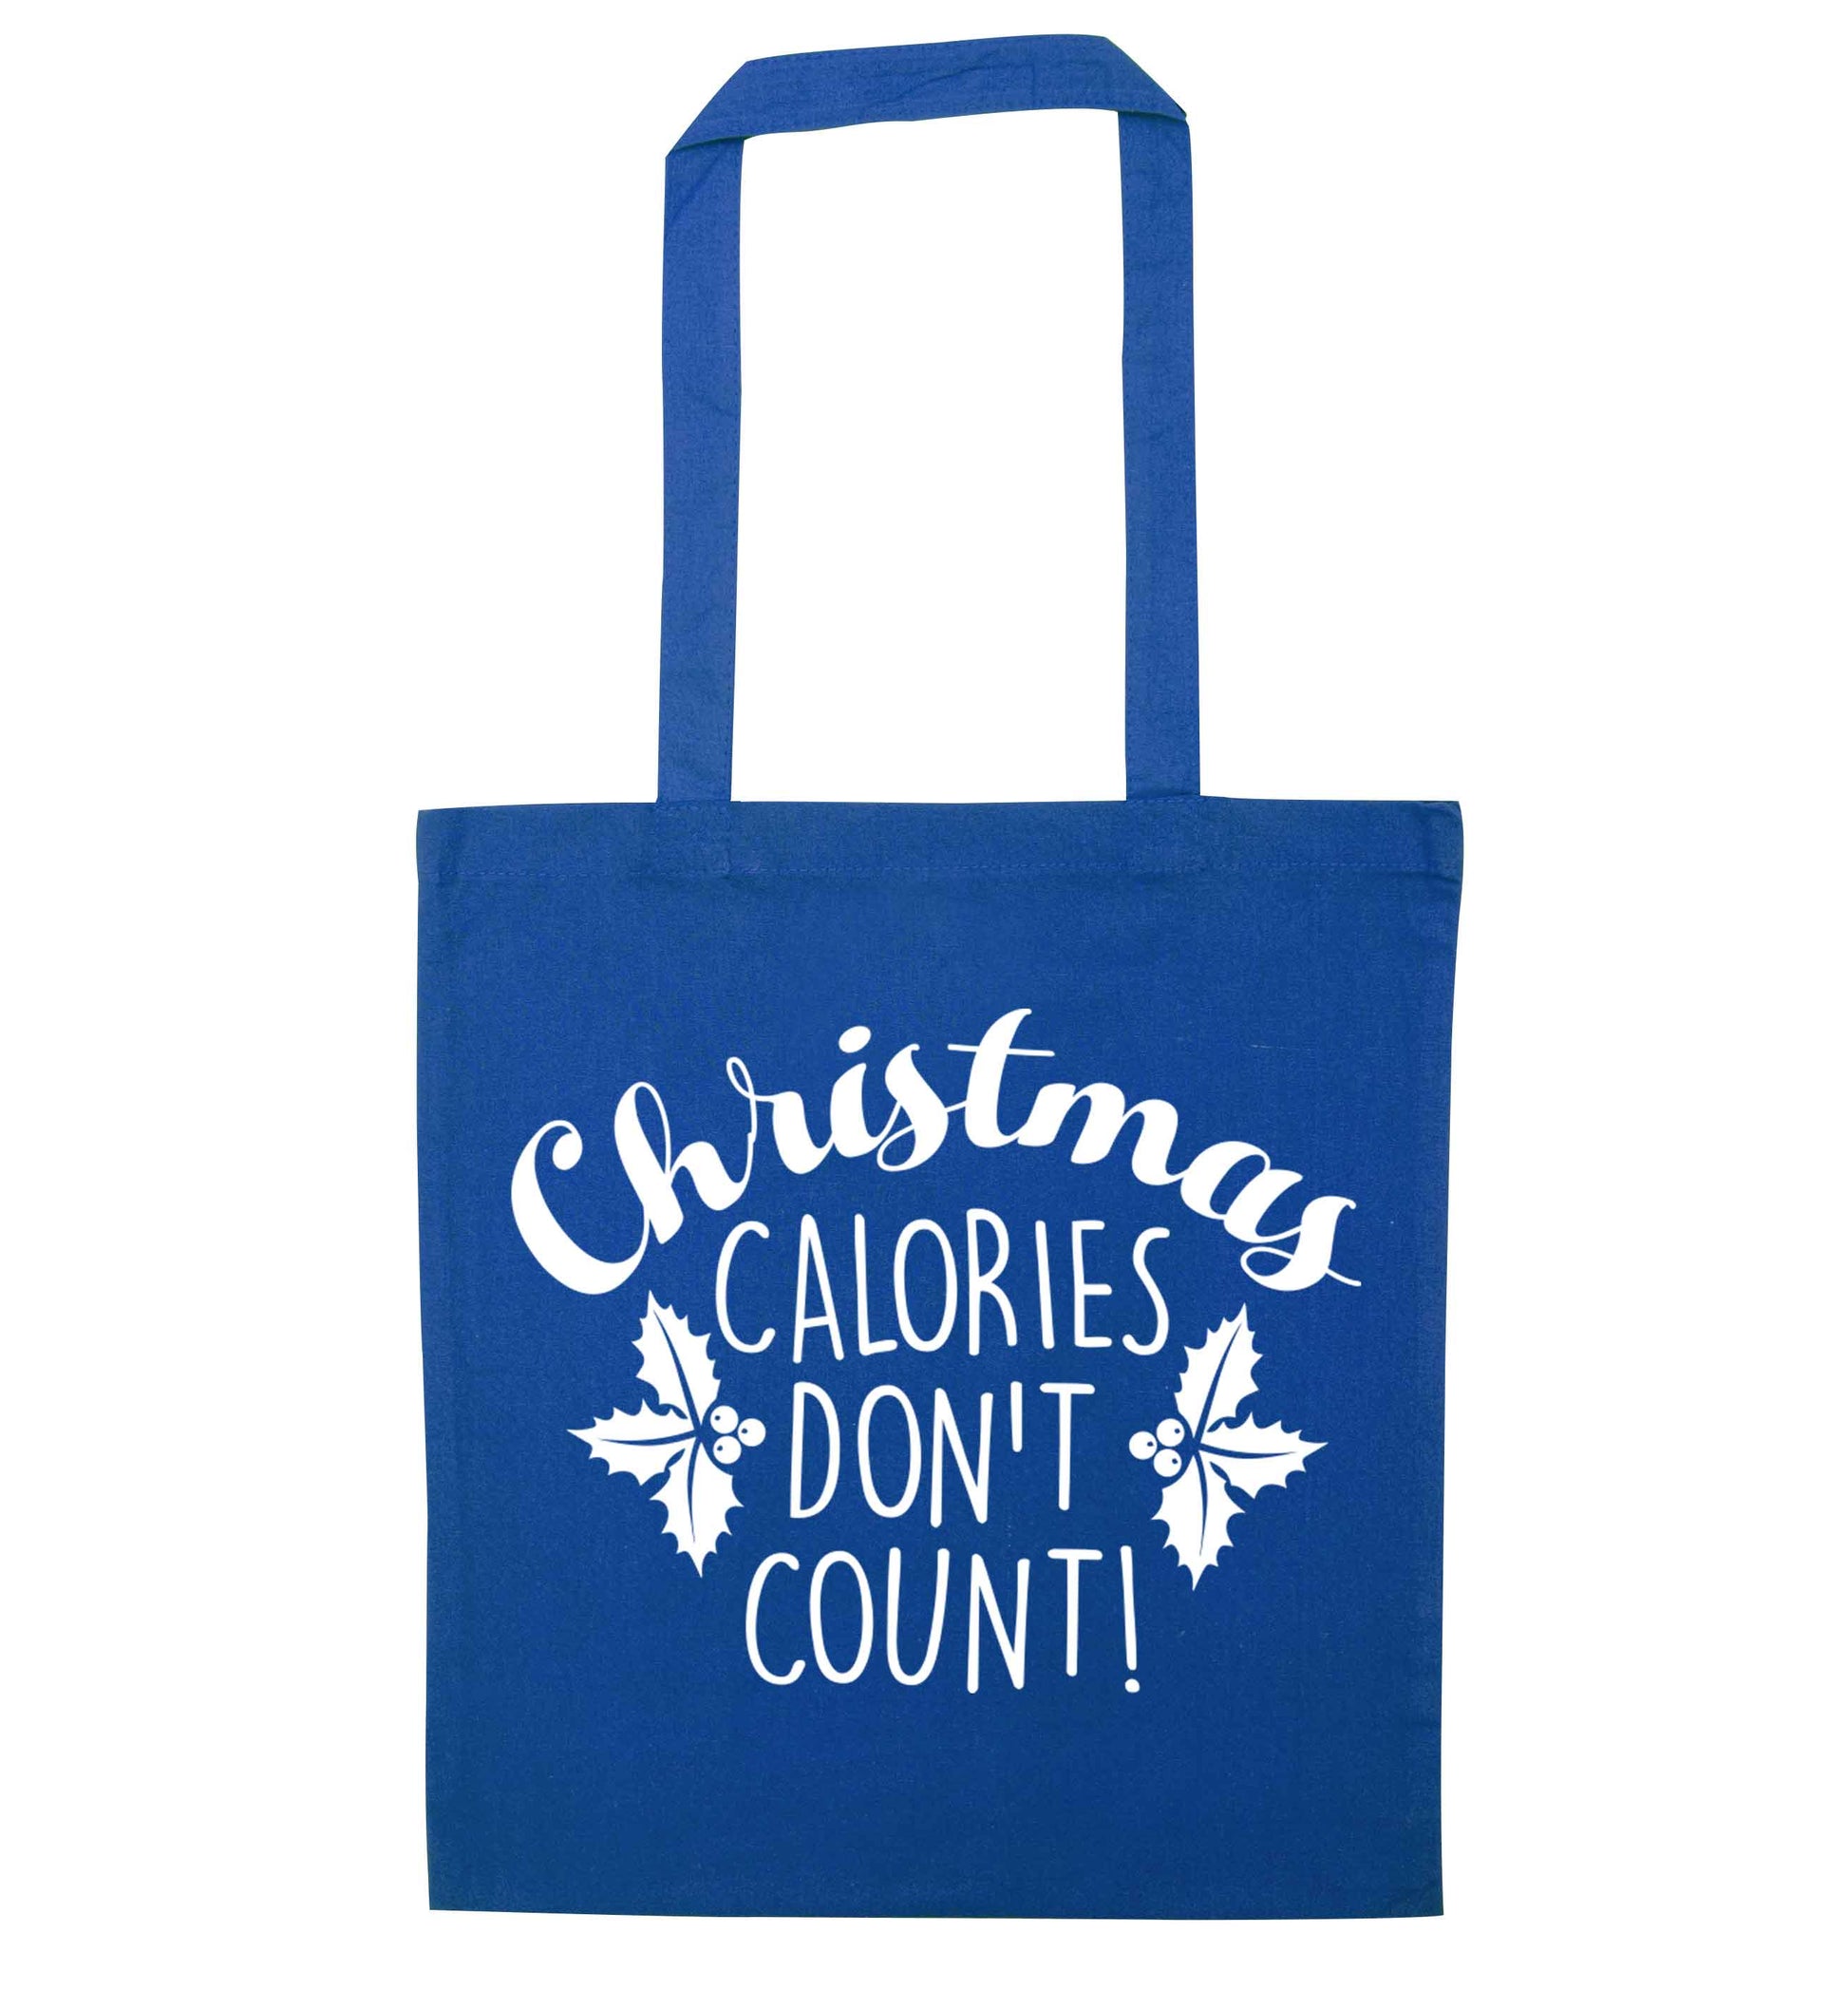 Christmas calories don't count blue tote bag